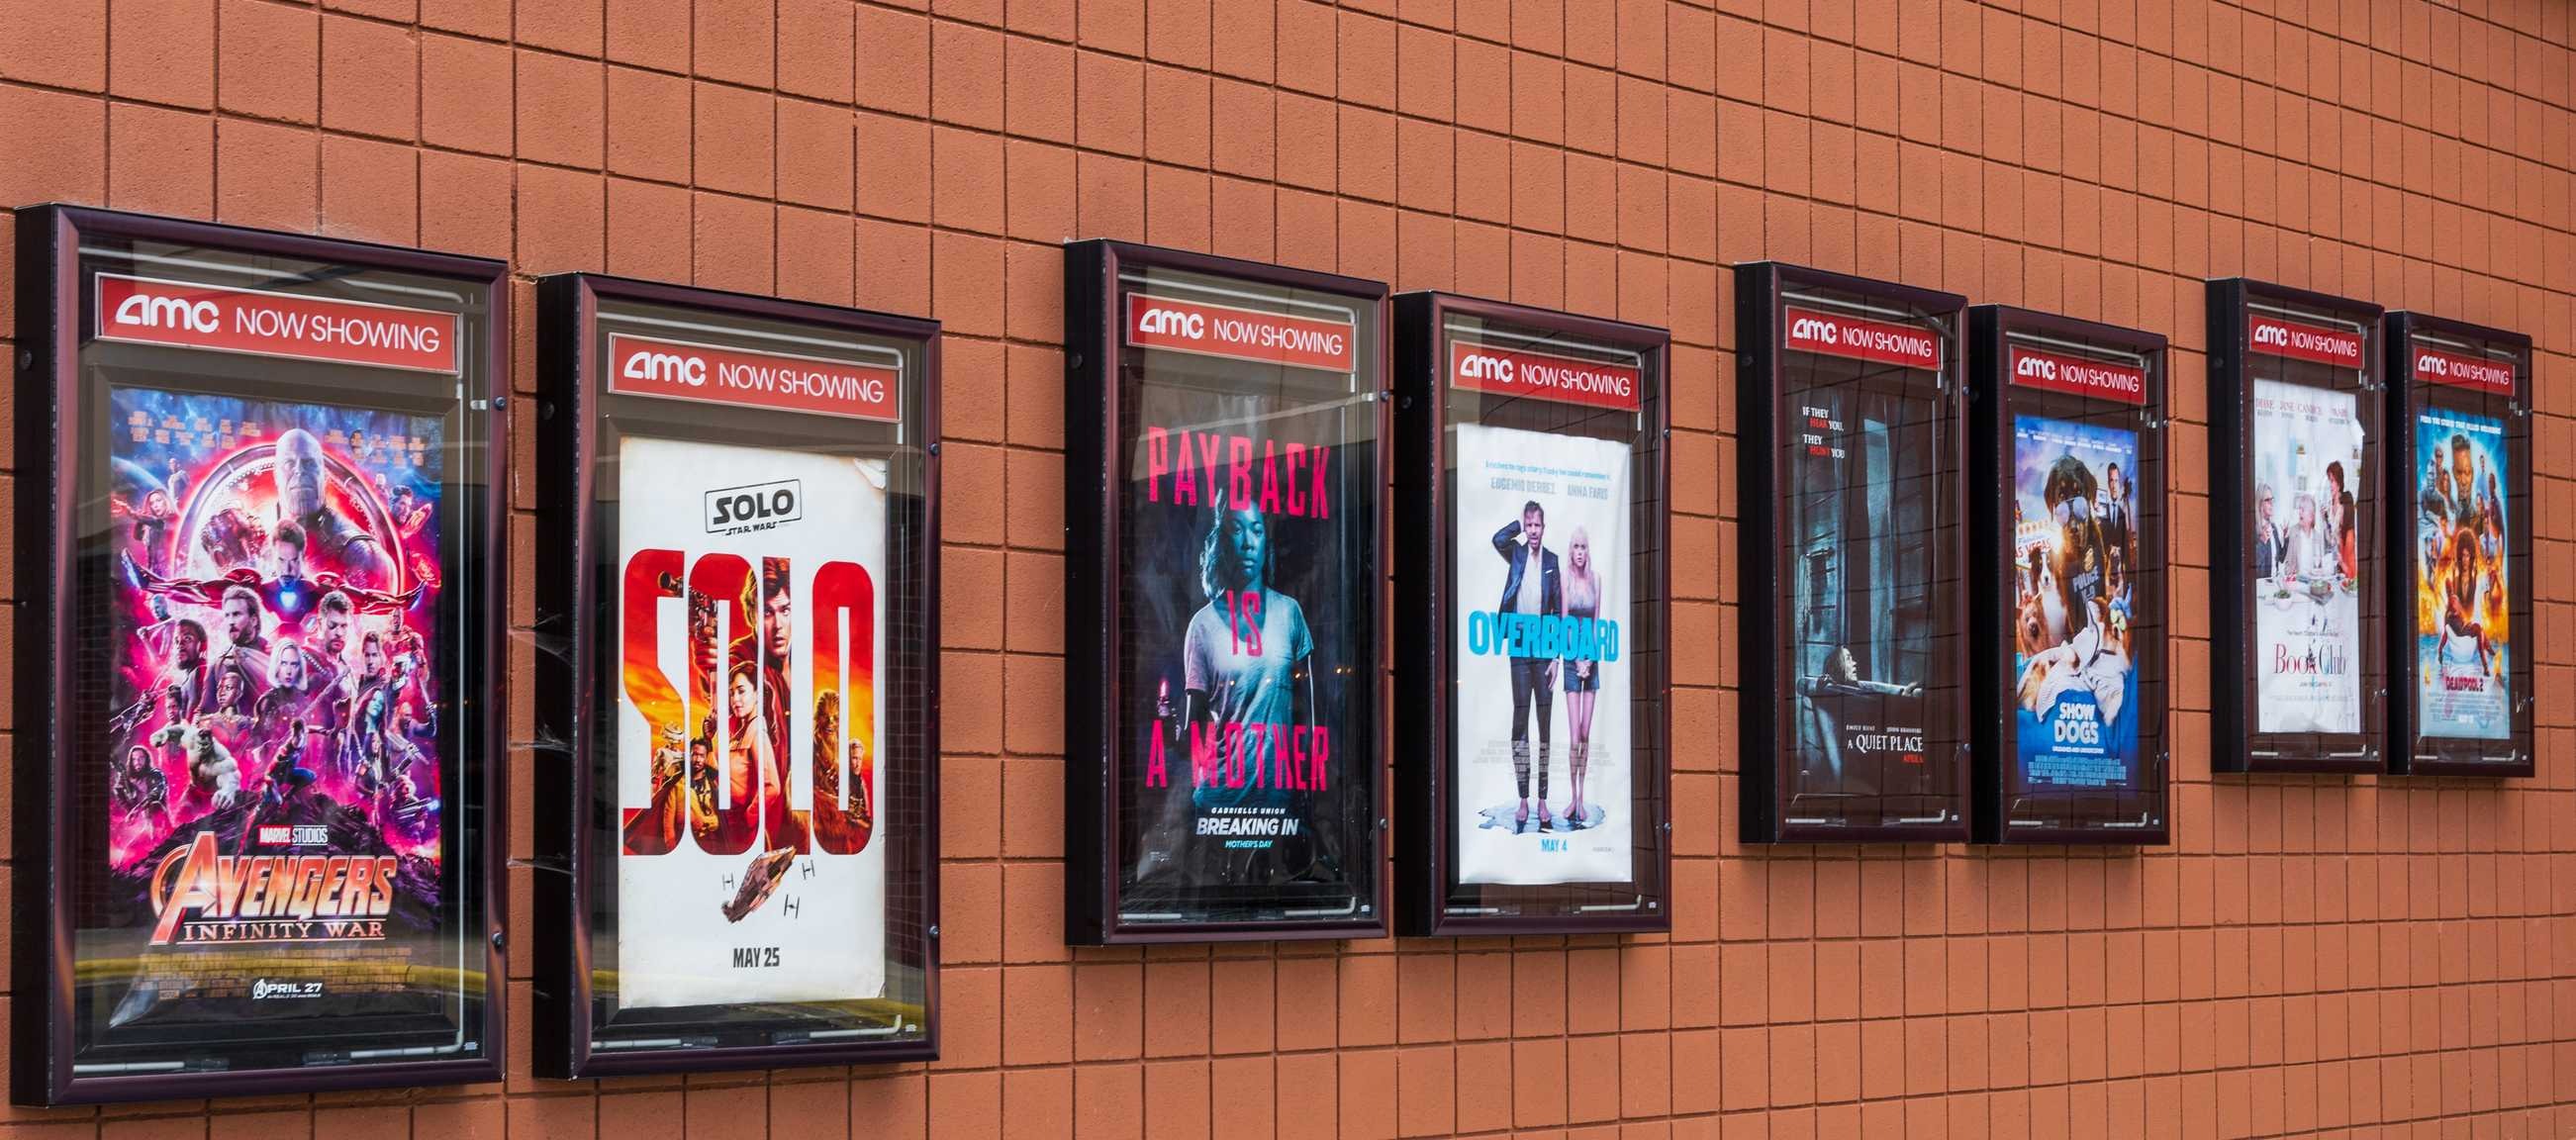 A cinema lobby with movie posters